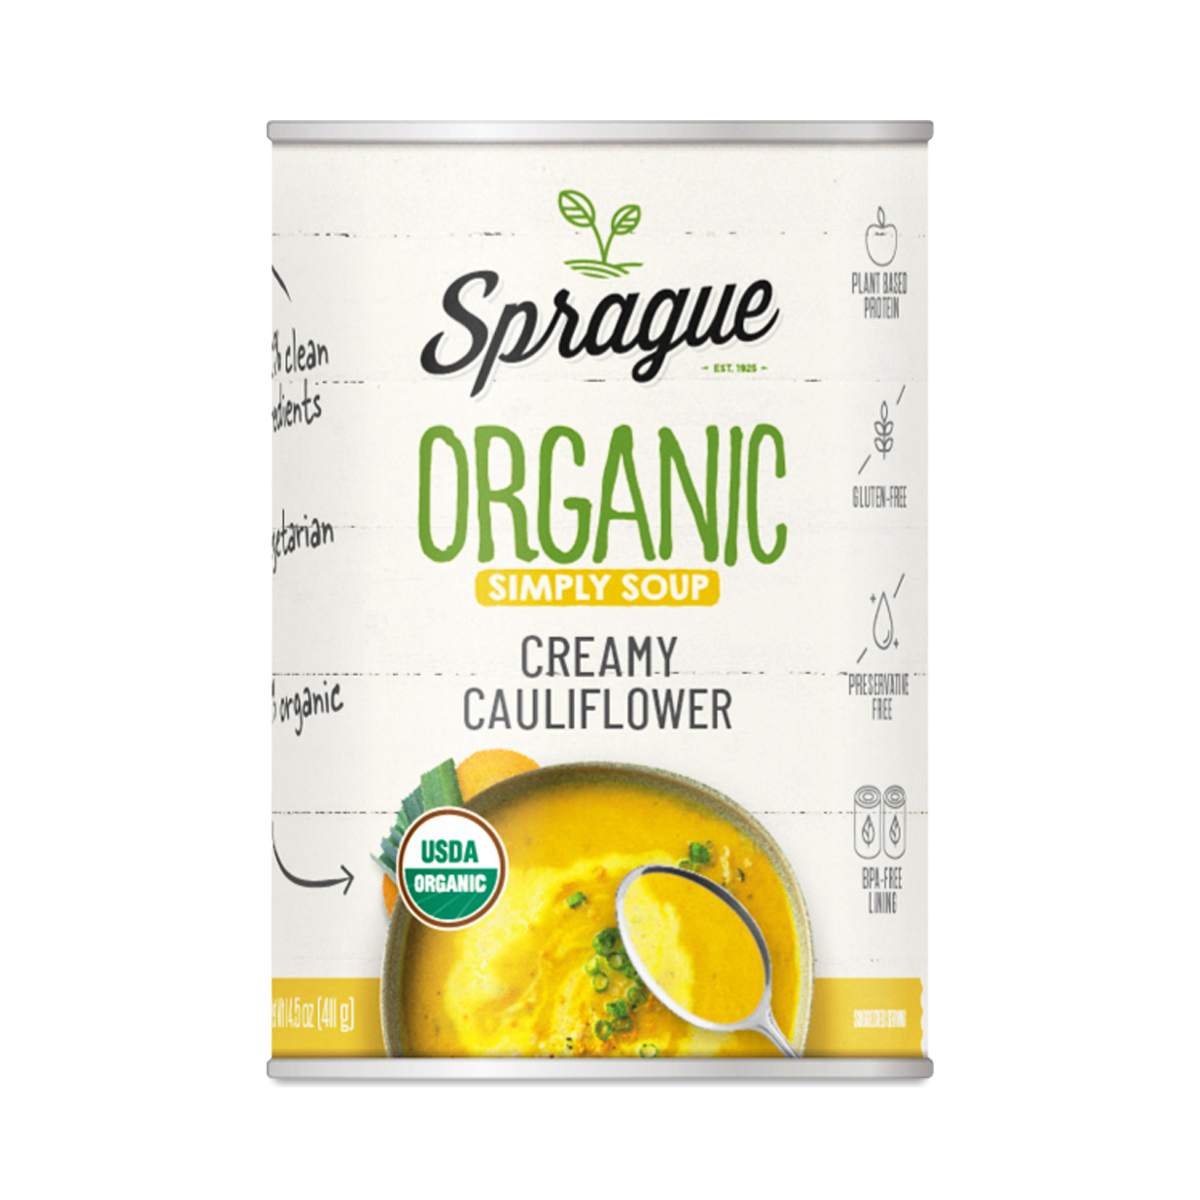 Sprague Organic Creamy Cauliflower Soup 15 oz can